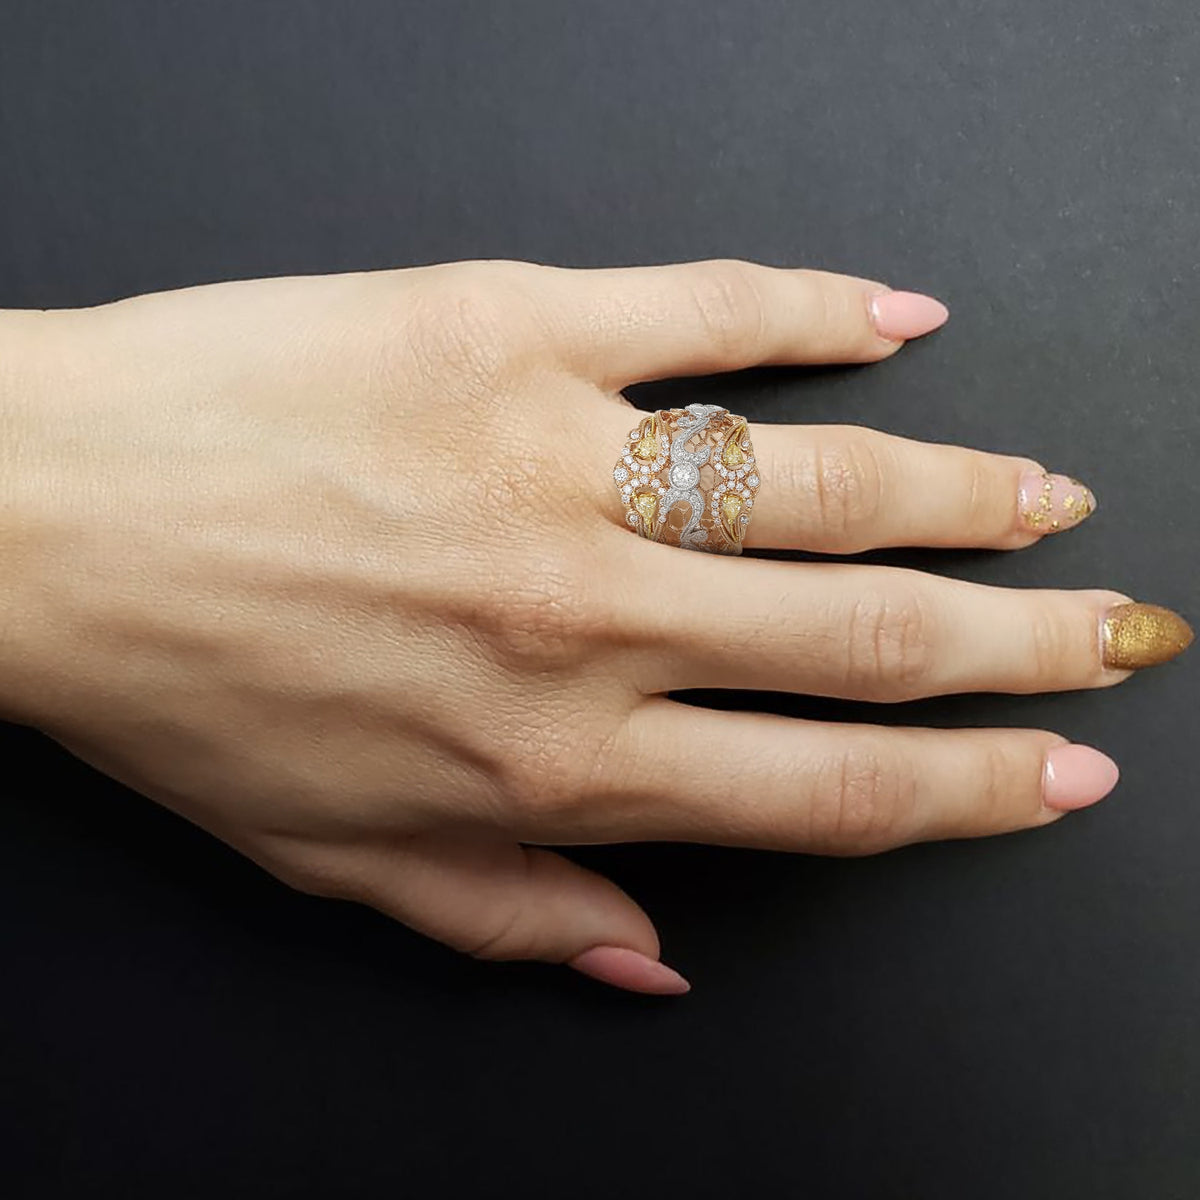 Filigree Diamond Two-Tone Gold Ring